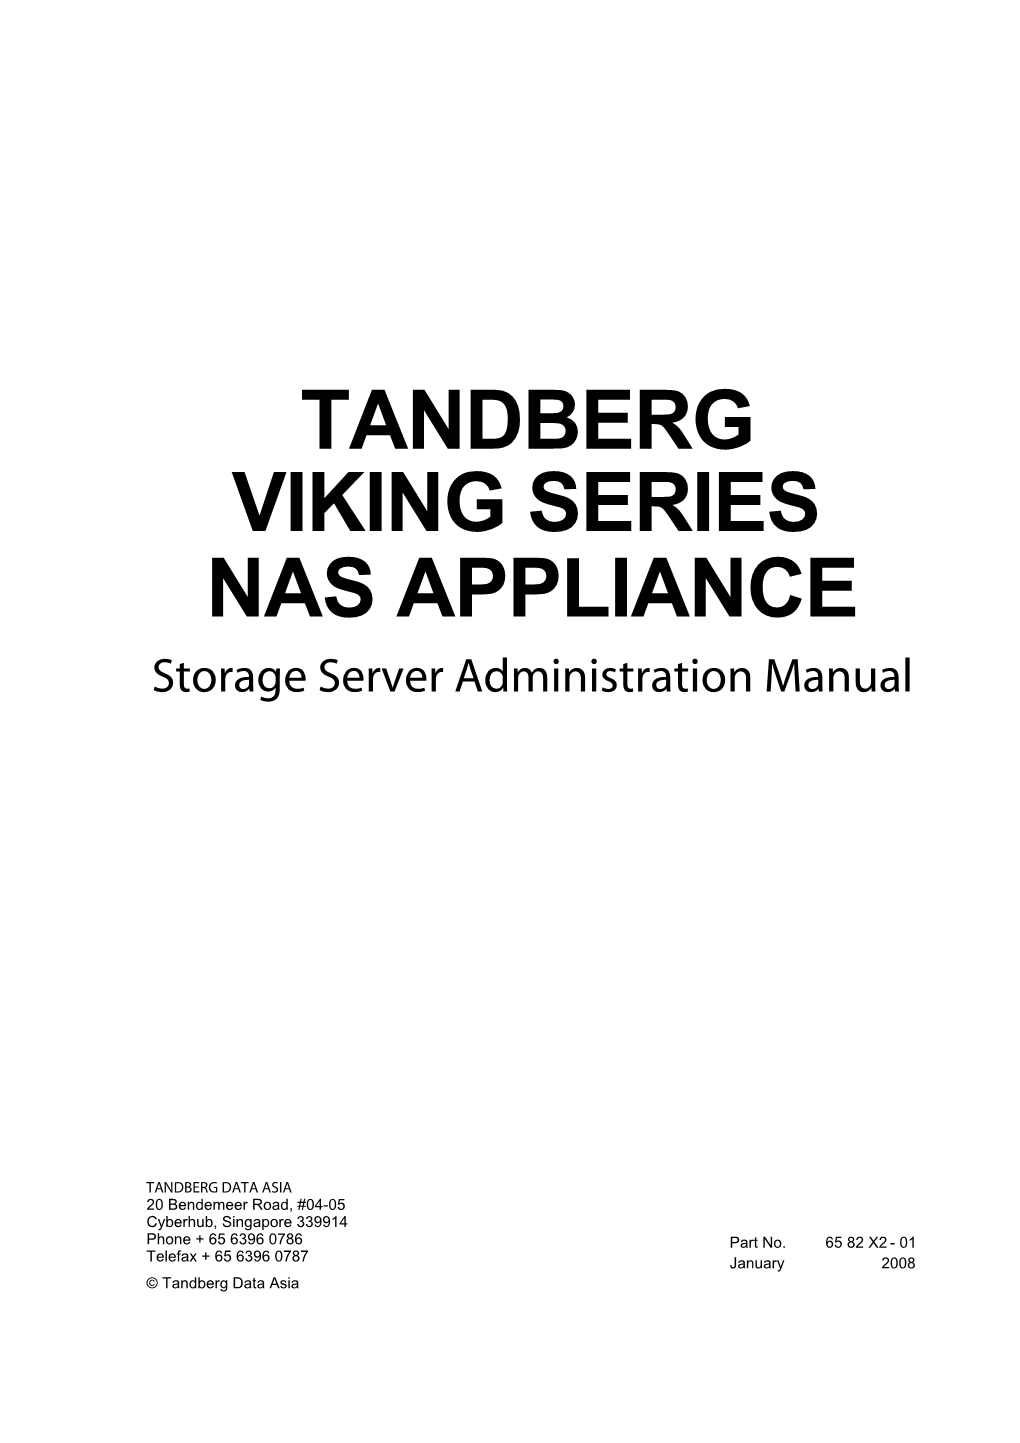 TANDBERG VIKING SERIES NAS APPLIANCE Storage Server Administration Manual